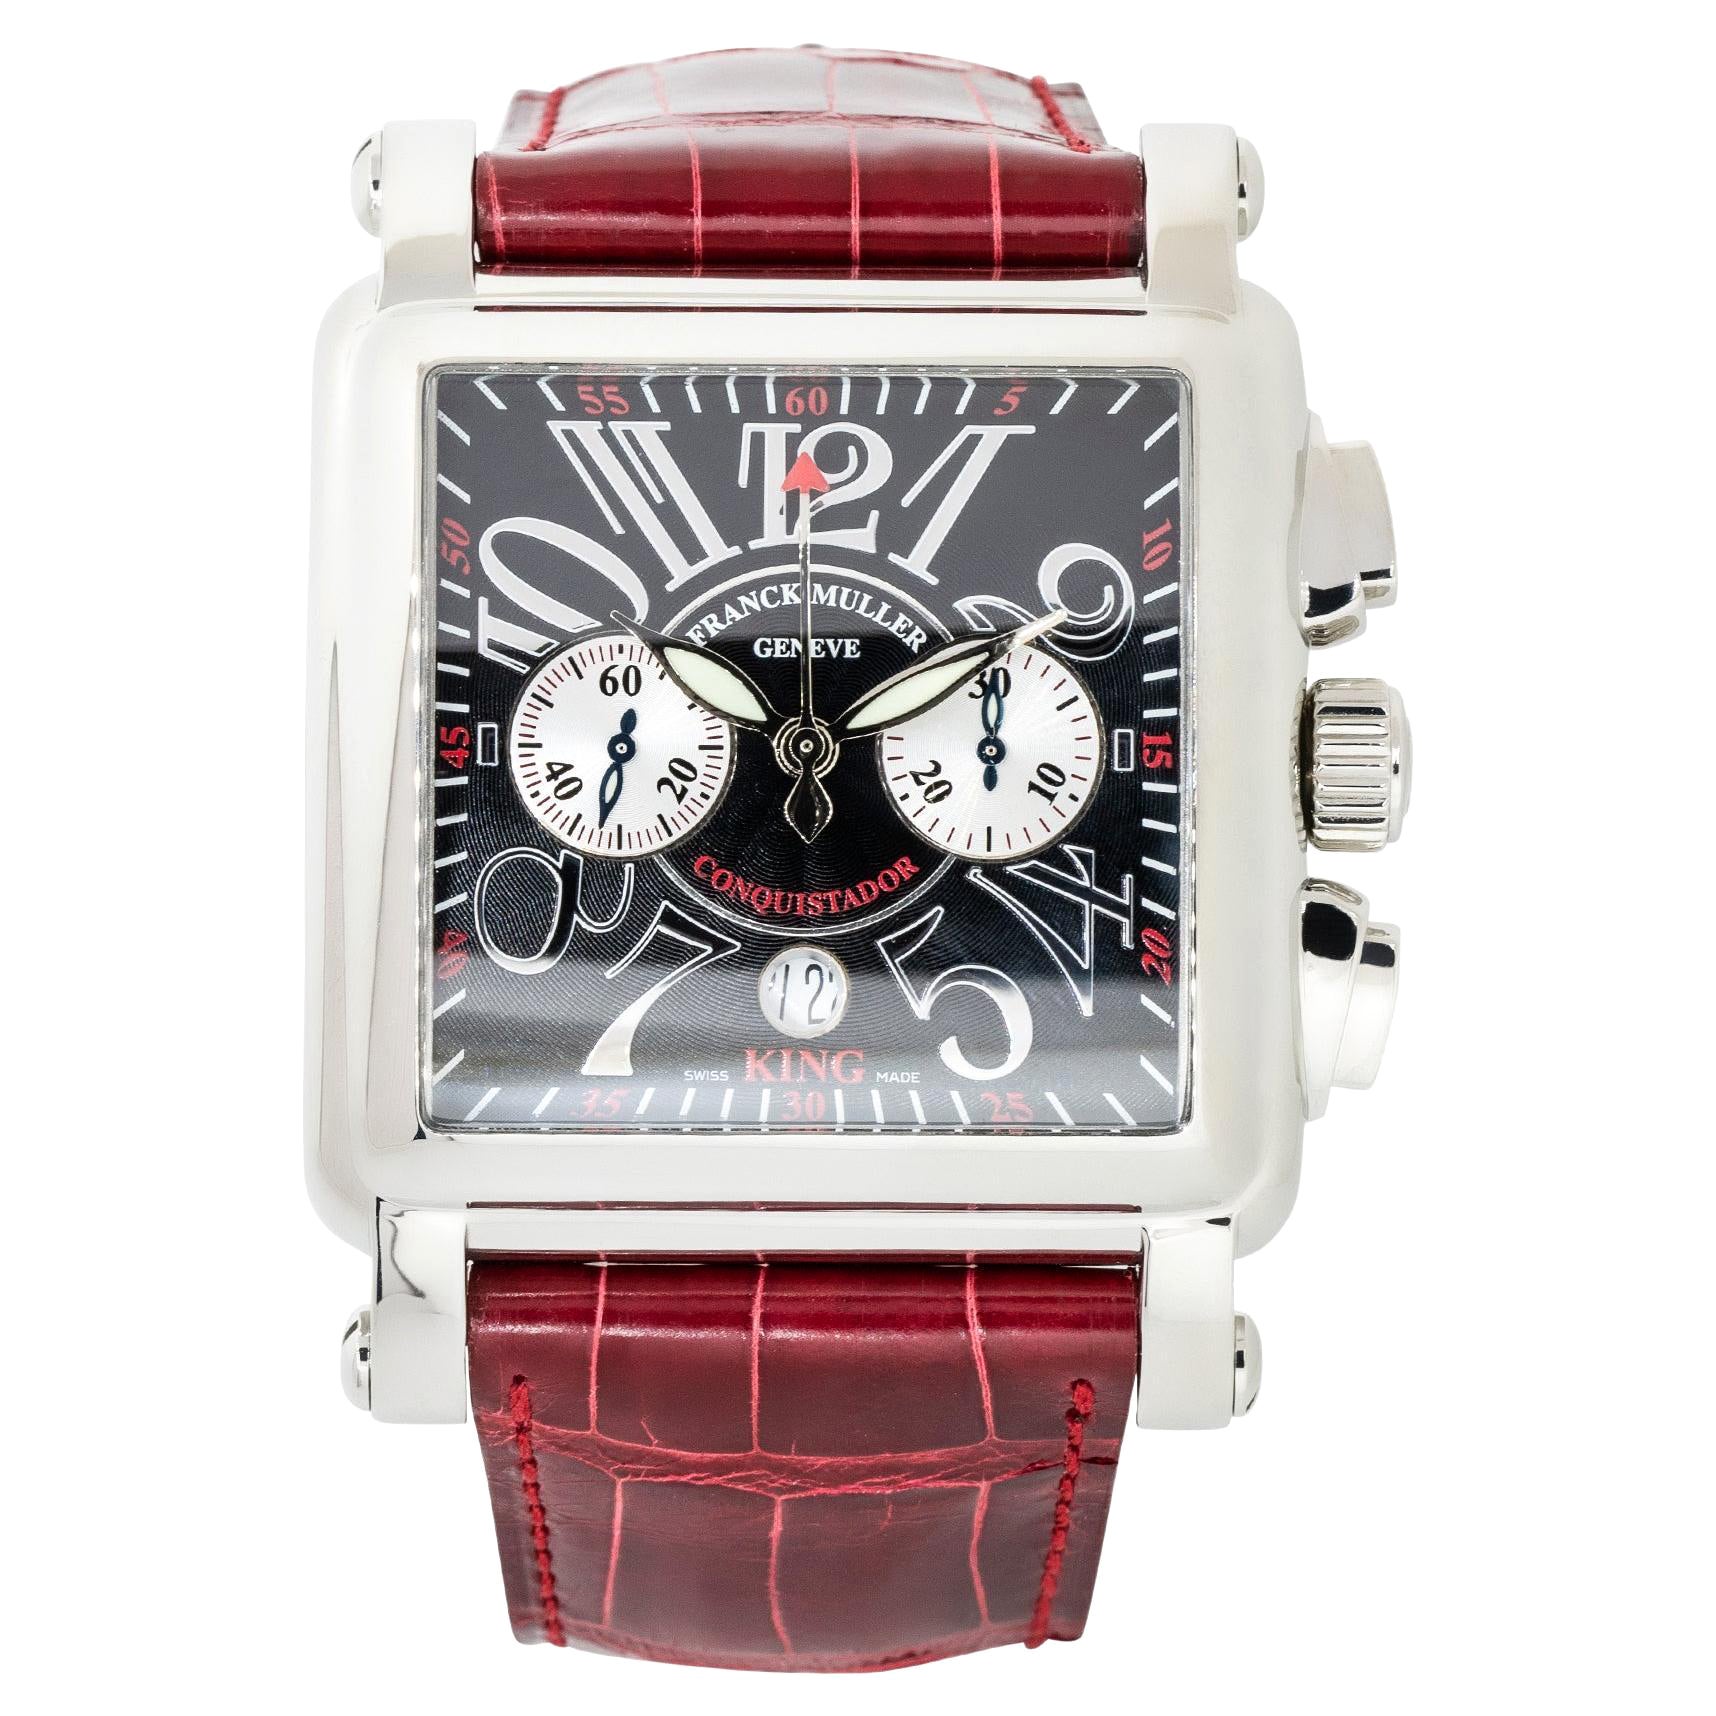 Is Franck Muller a luxury watch?